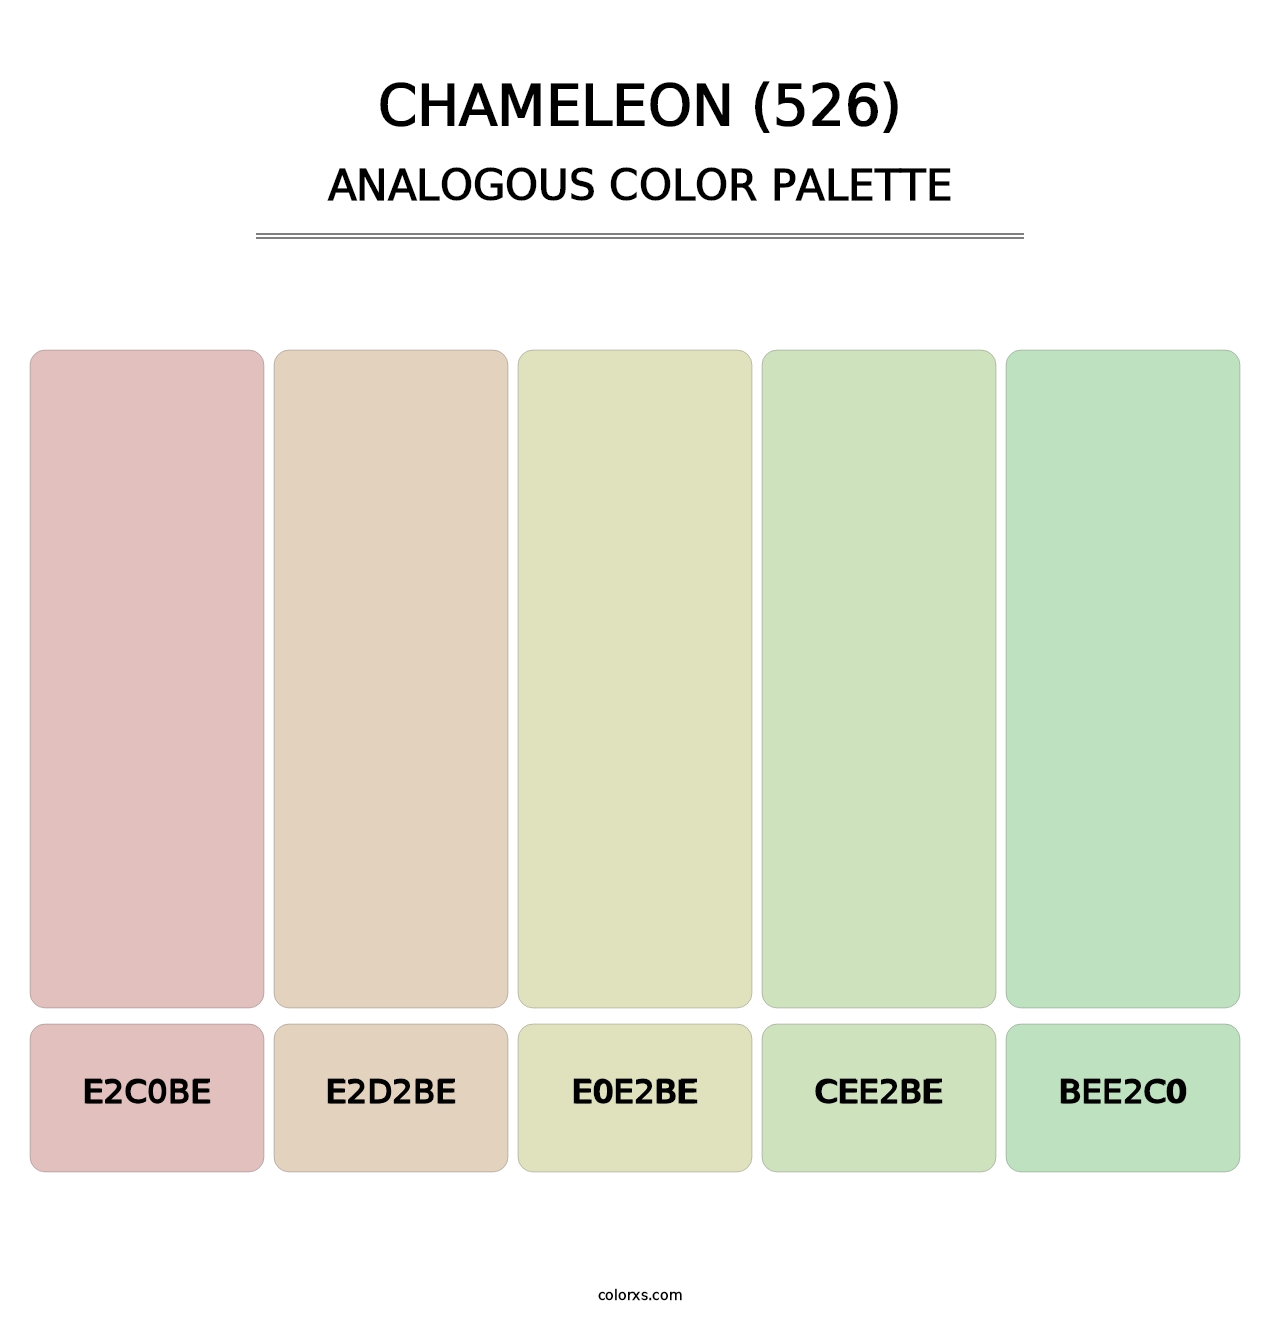 Chameleon (526) - Analogous Color Palette